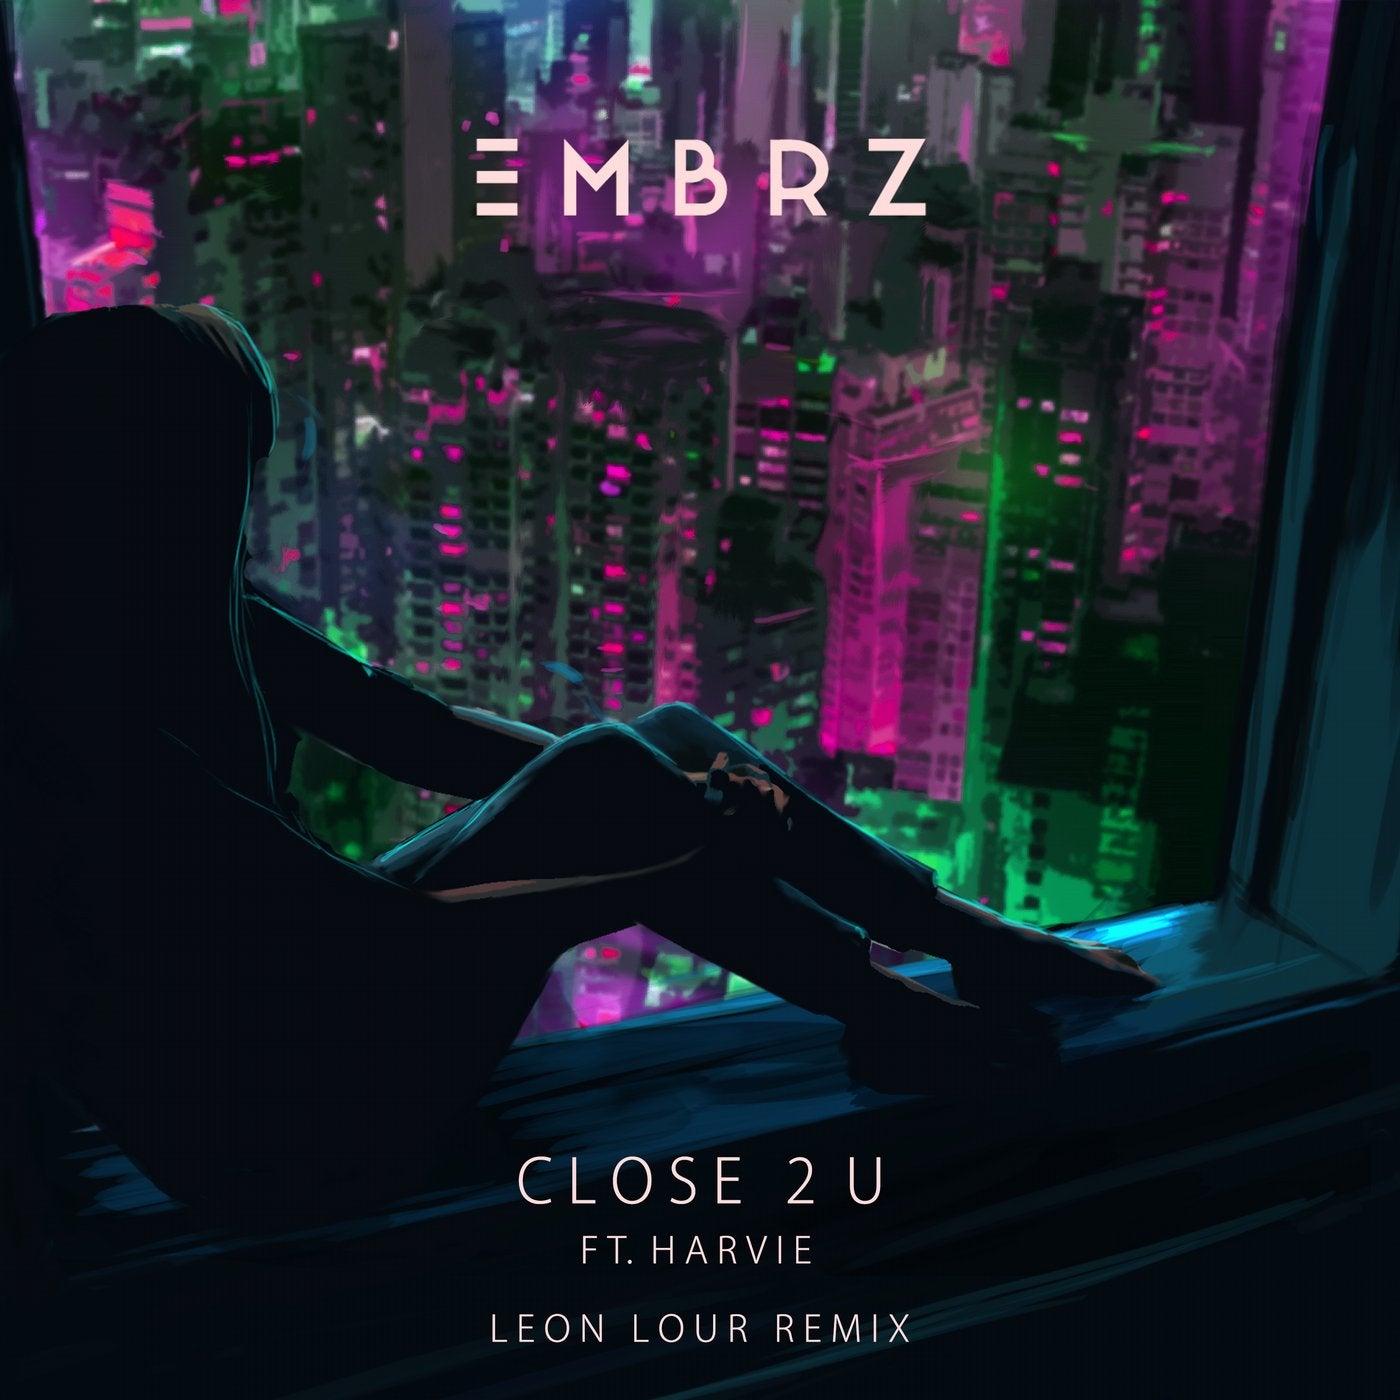 Close 2 U - Leon Lour Remix